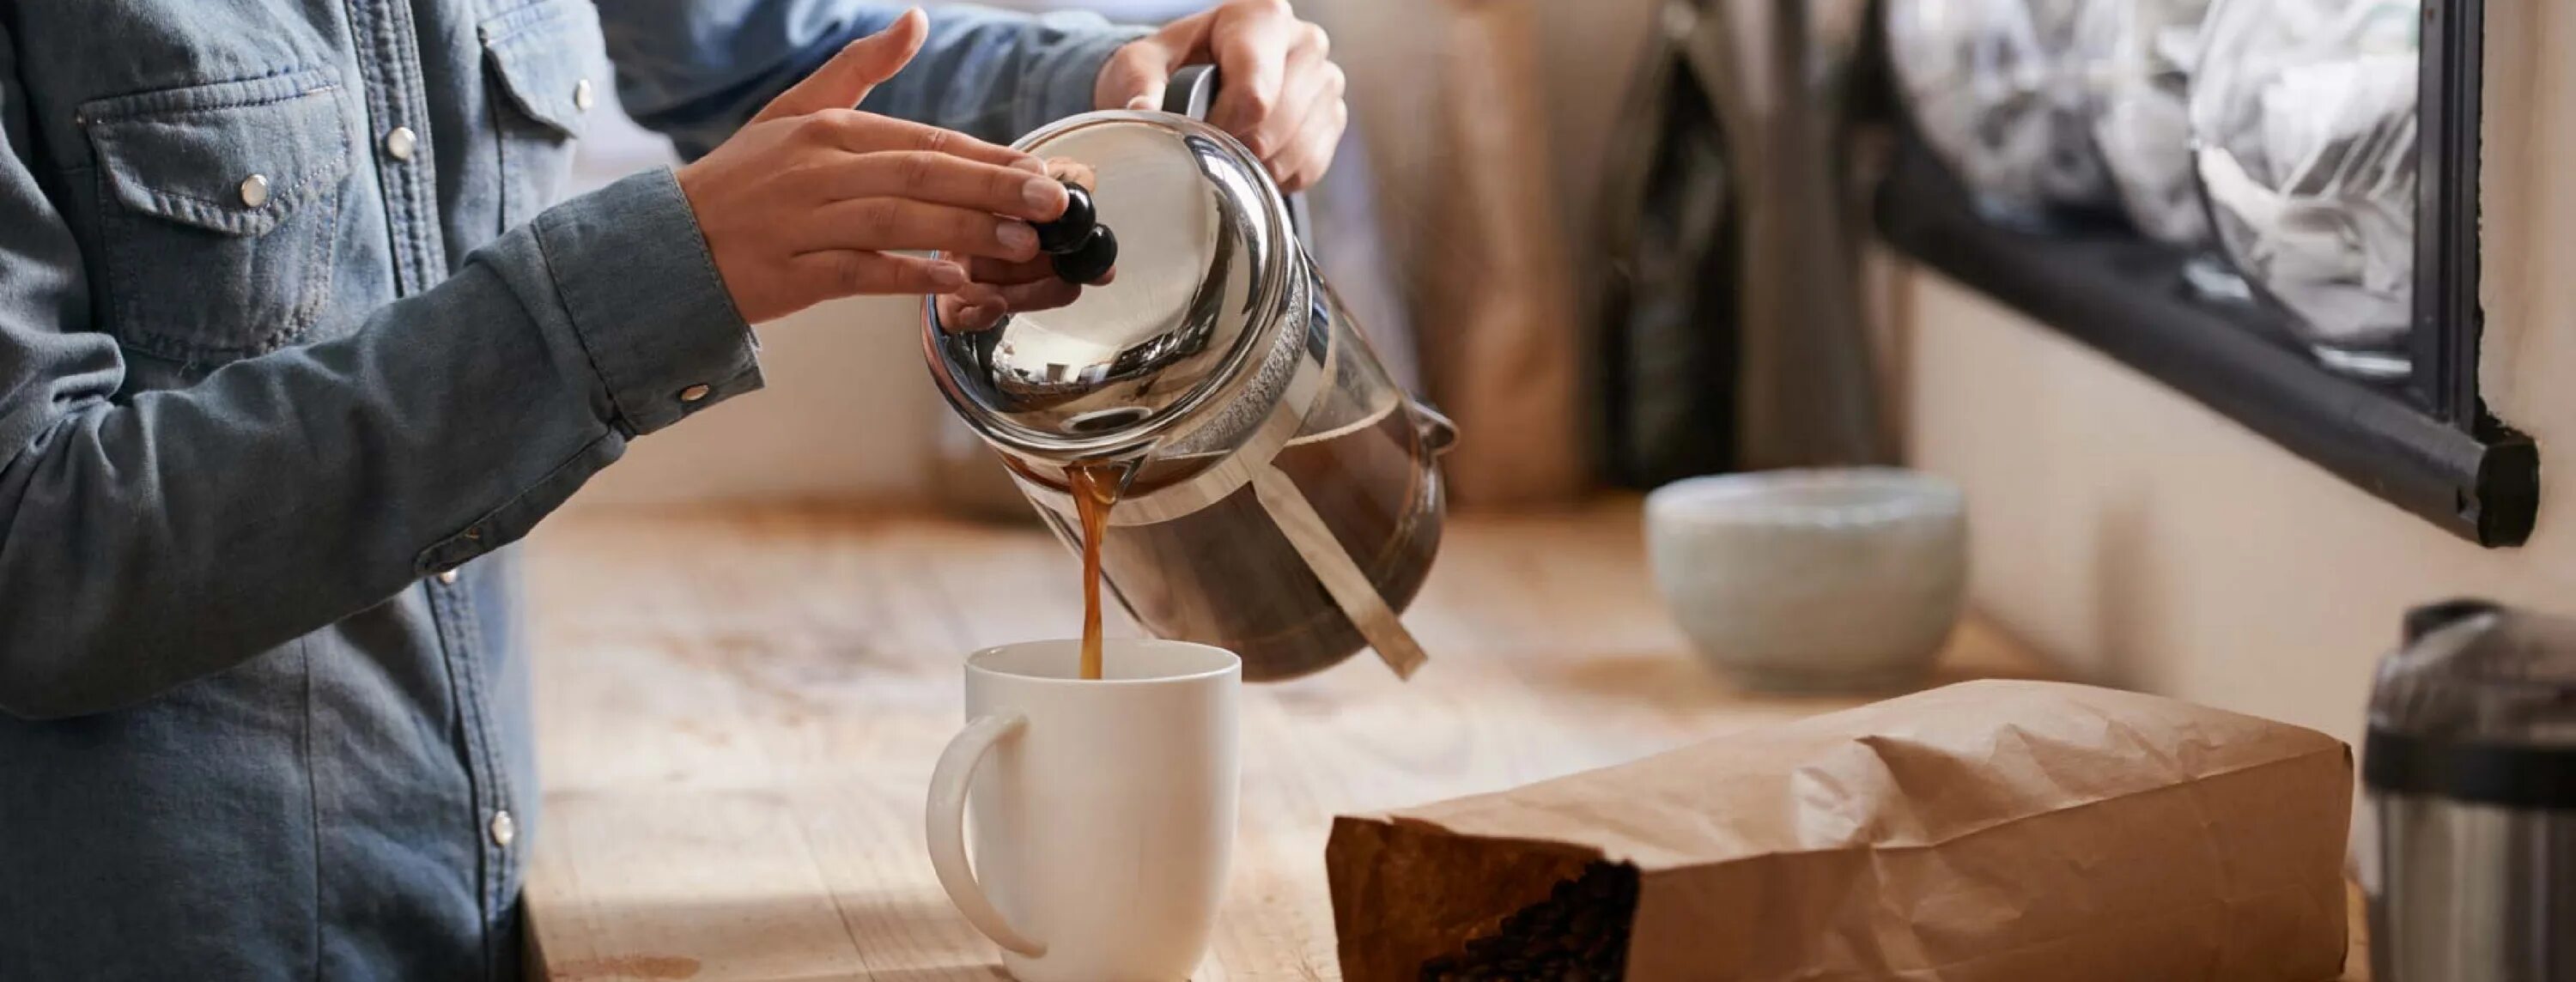 How to making home. Кофе Home. Жажда кофе. Экспертиза кофе. Фотосессия в кофейне варка кофе.